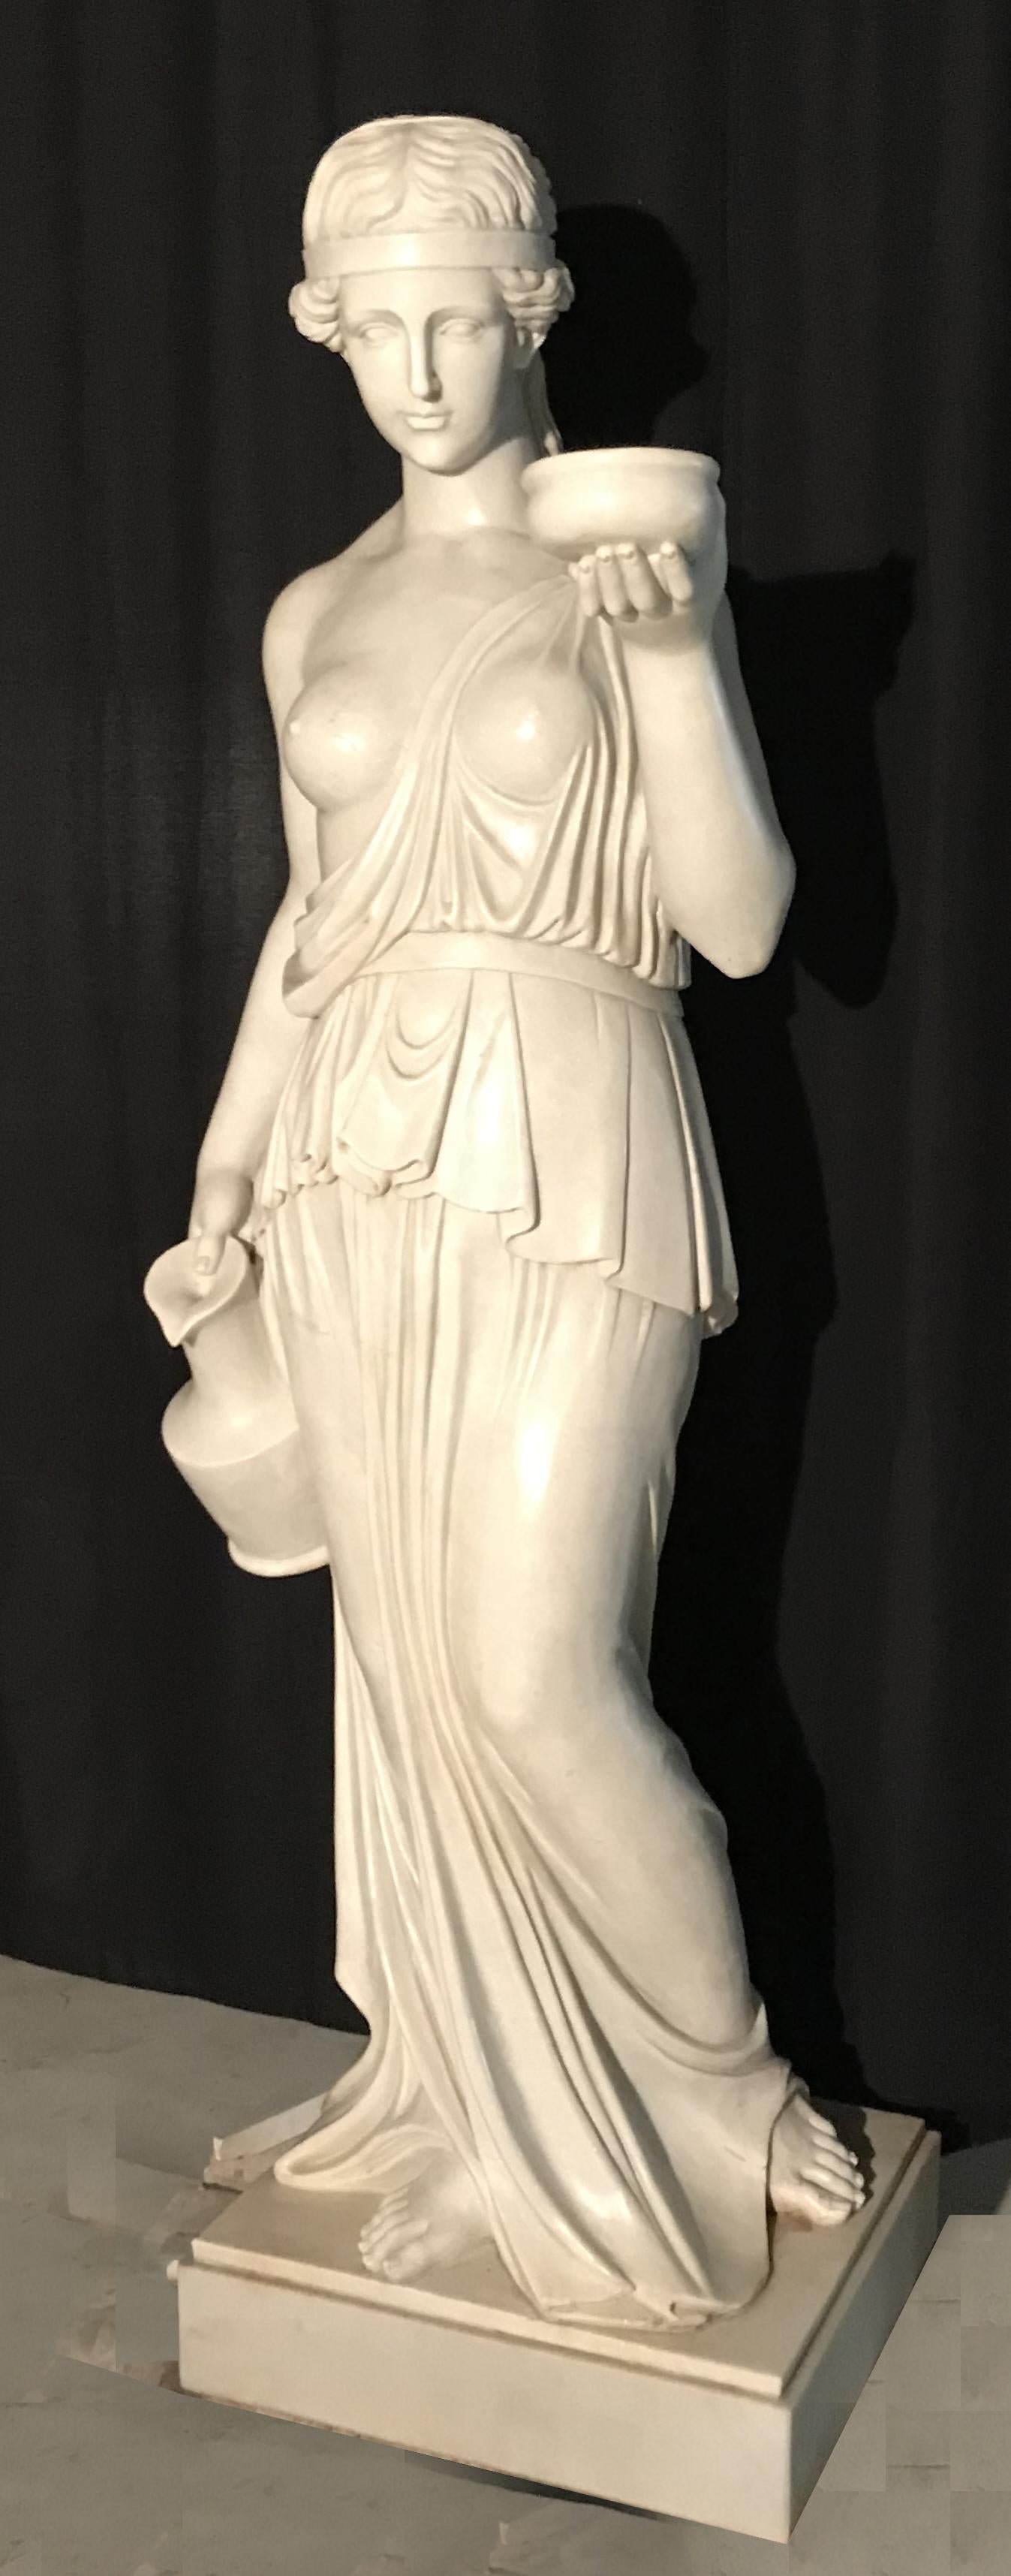 italian neoclassical sculptor